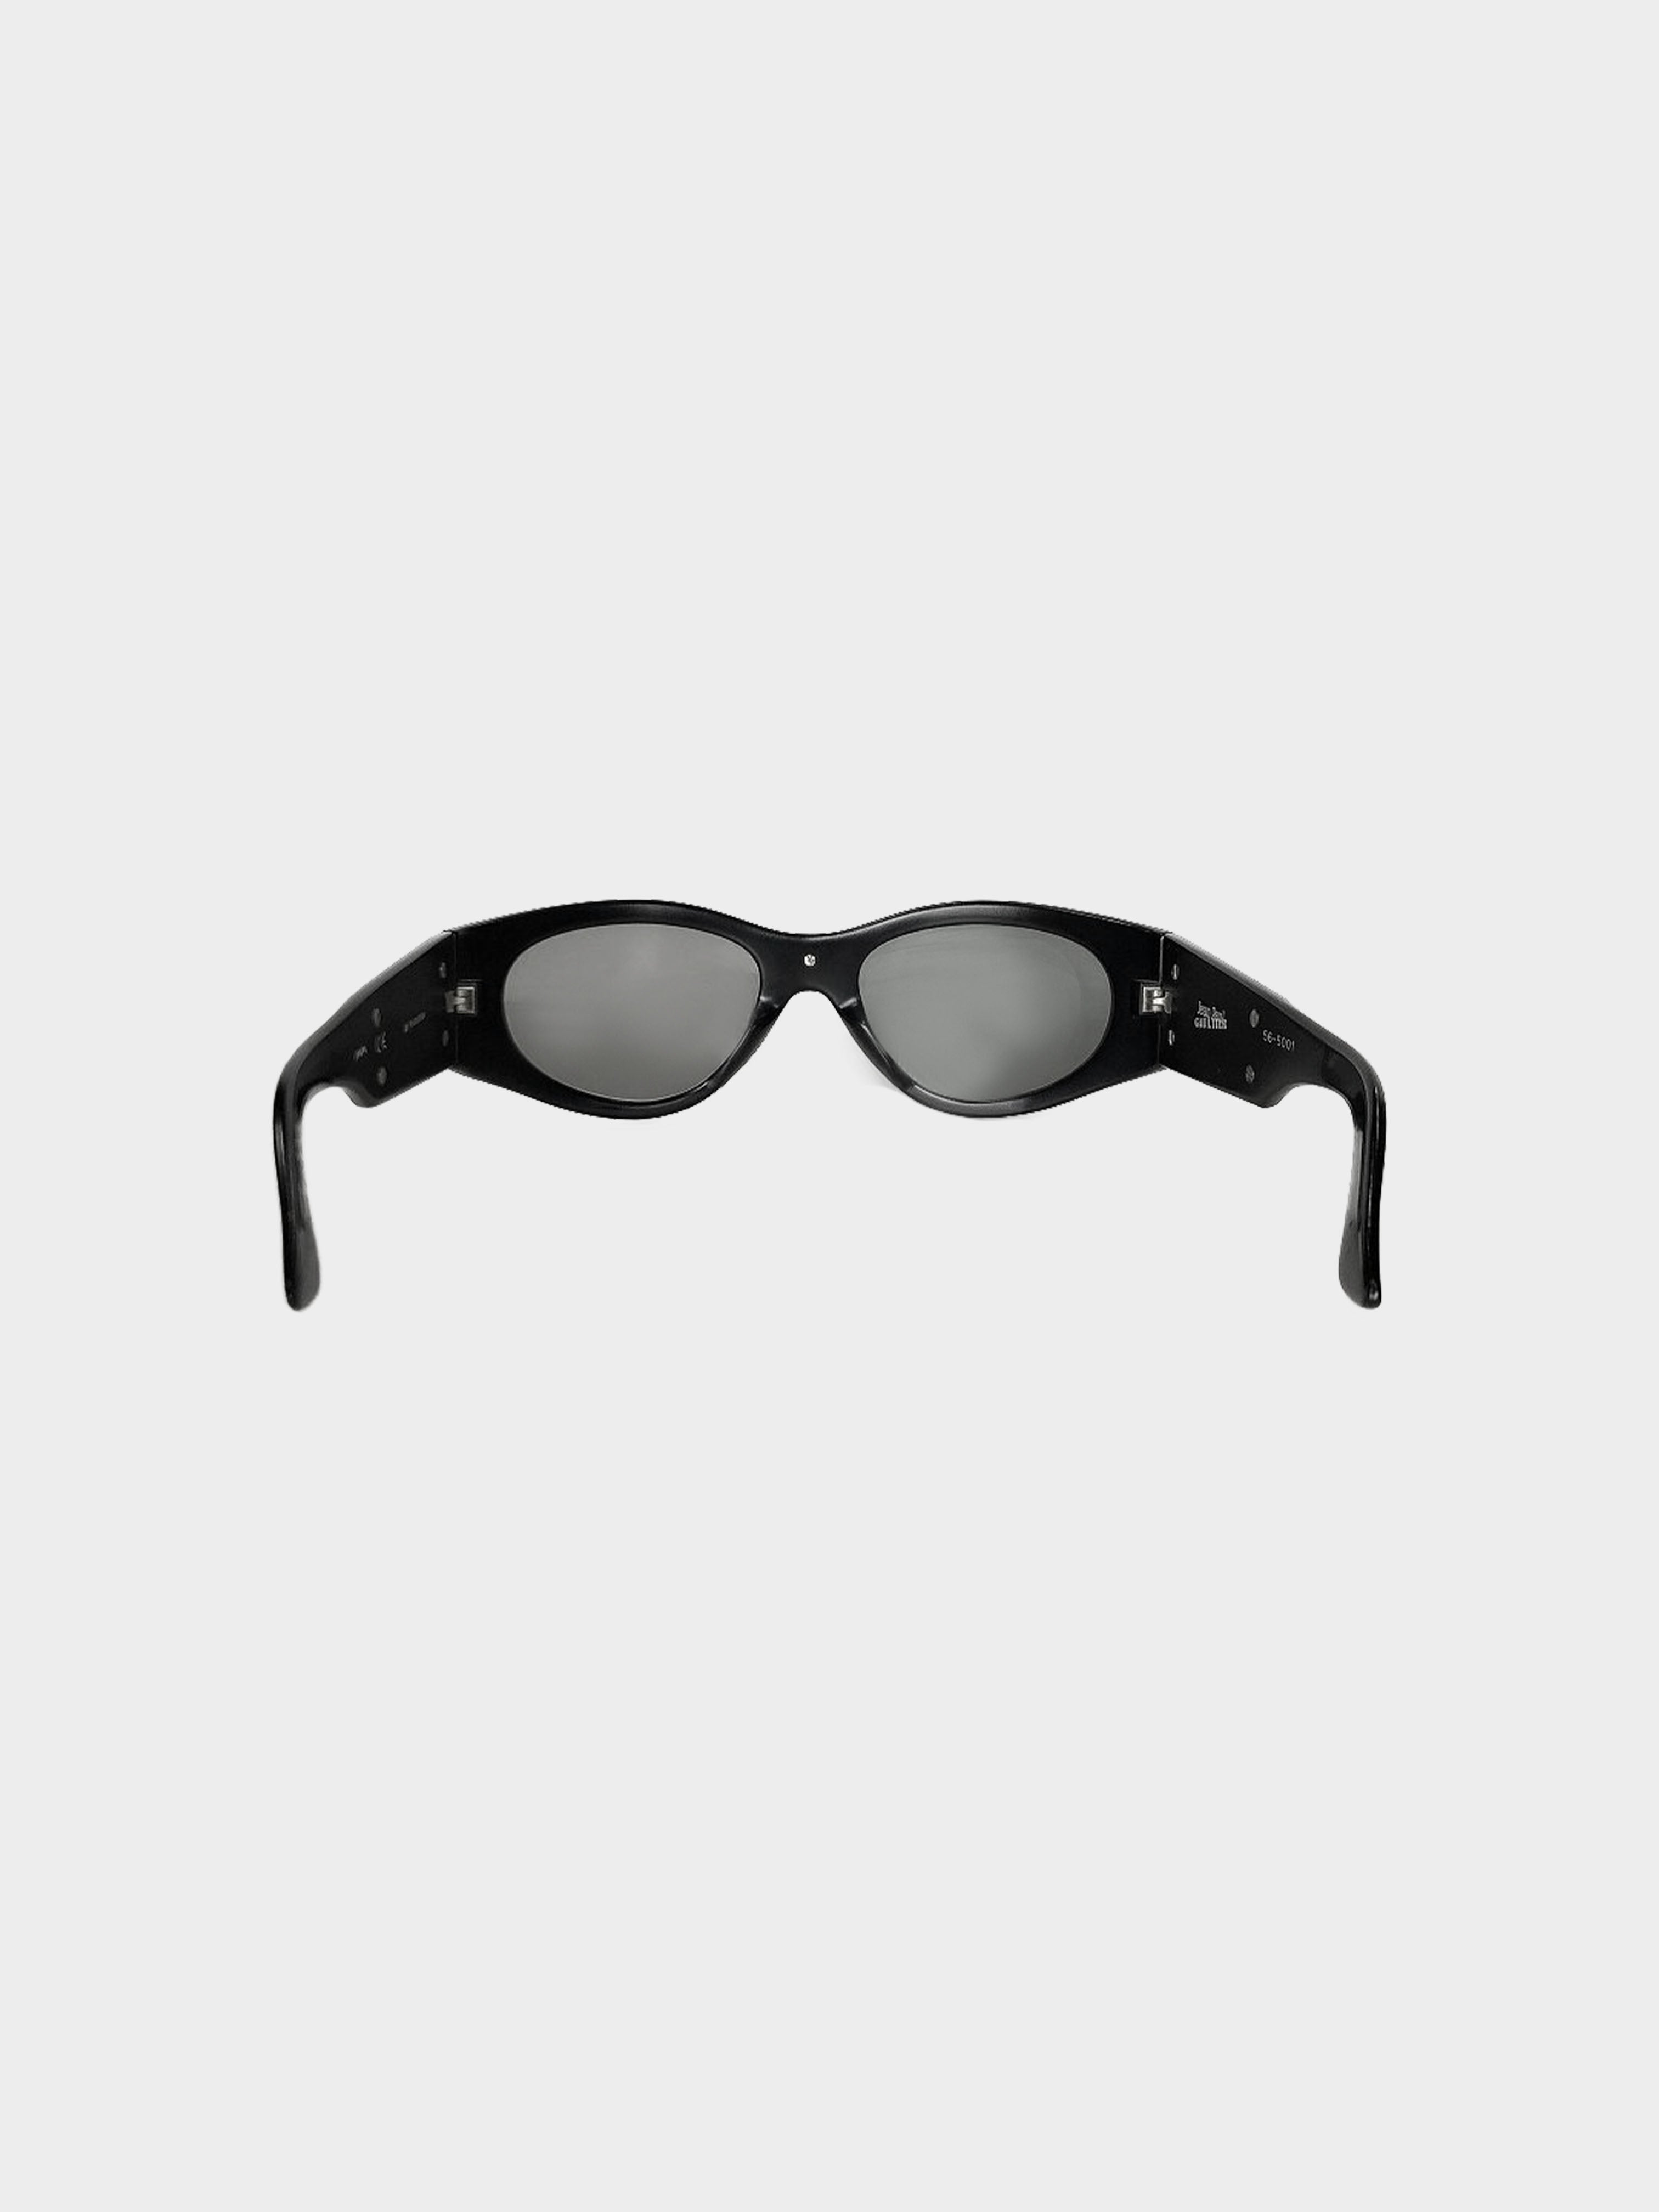 Jean Paul Gaultier 1990s Steampunk Sunglasses